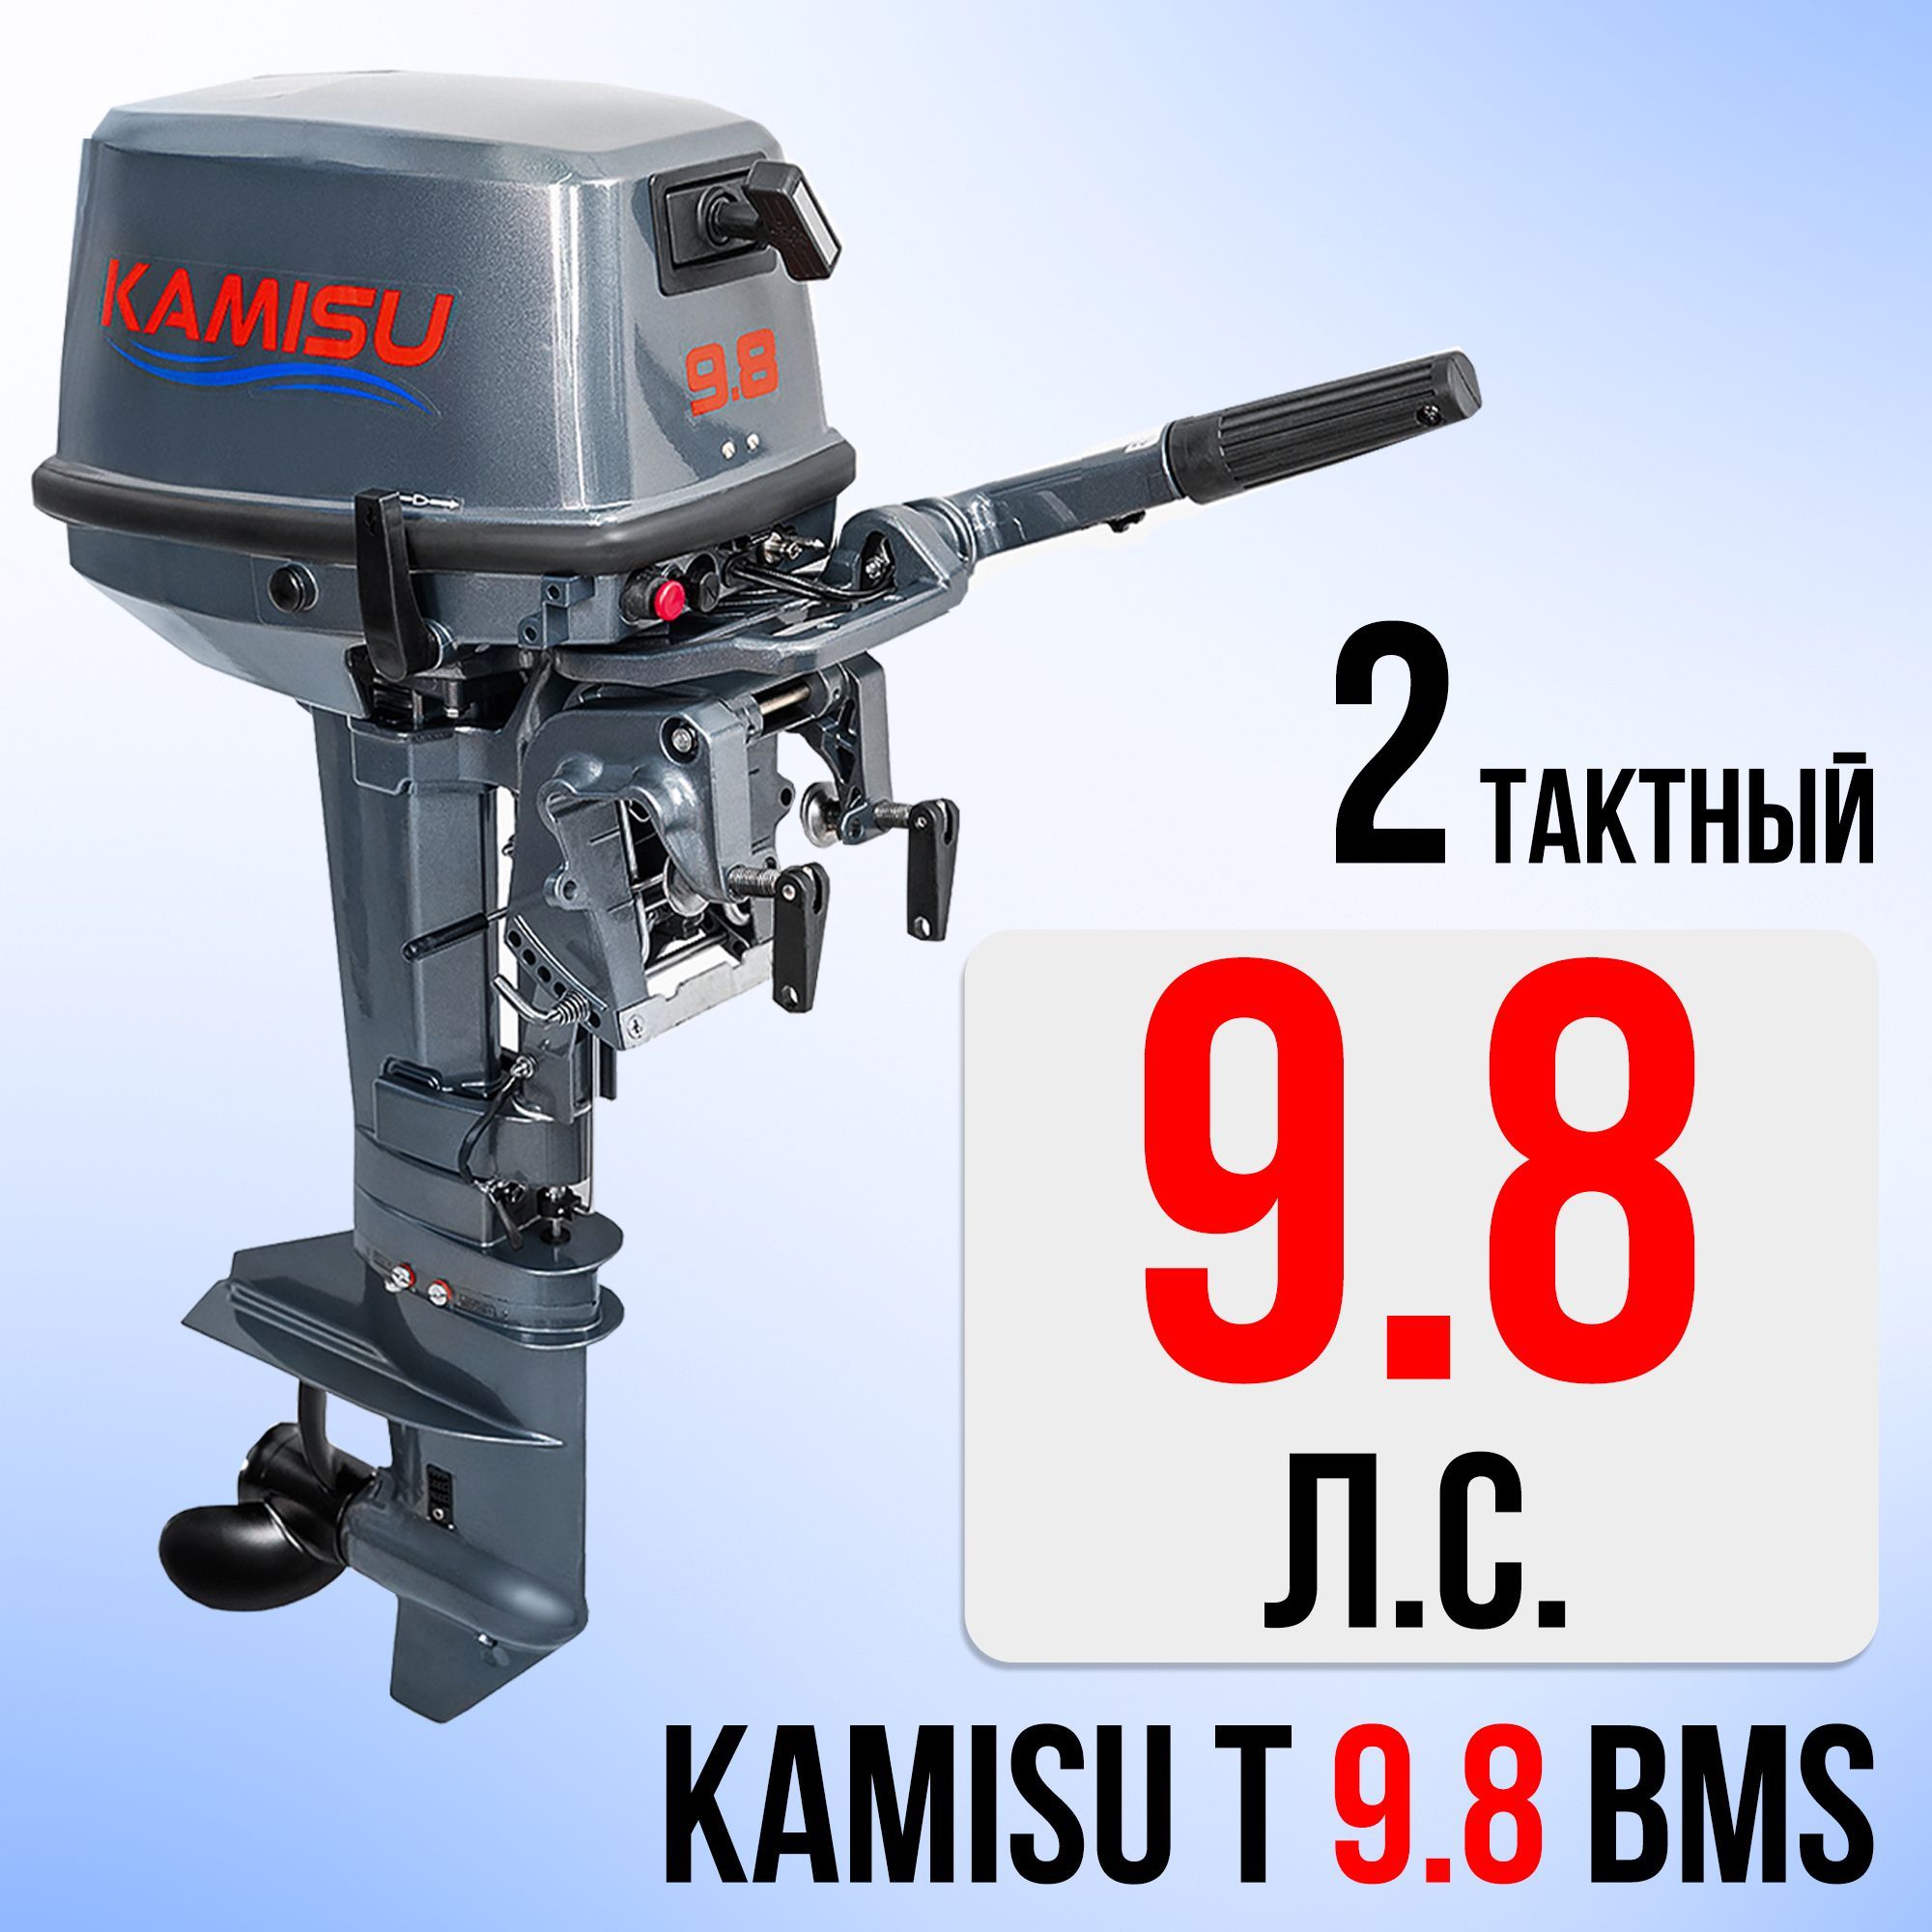 Мотор камису 9.8. Лодочный мотор Kamisu t9.8BMS.